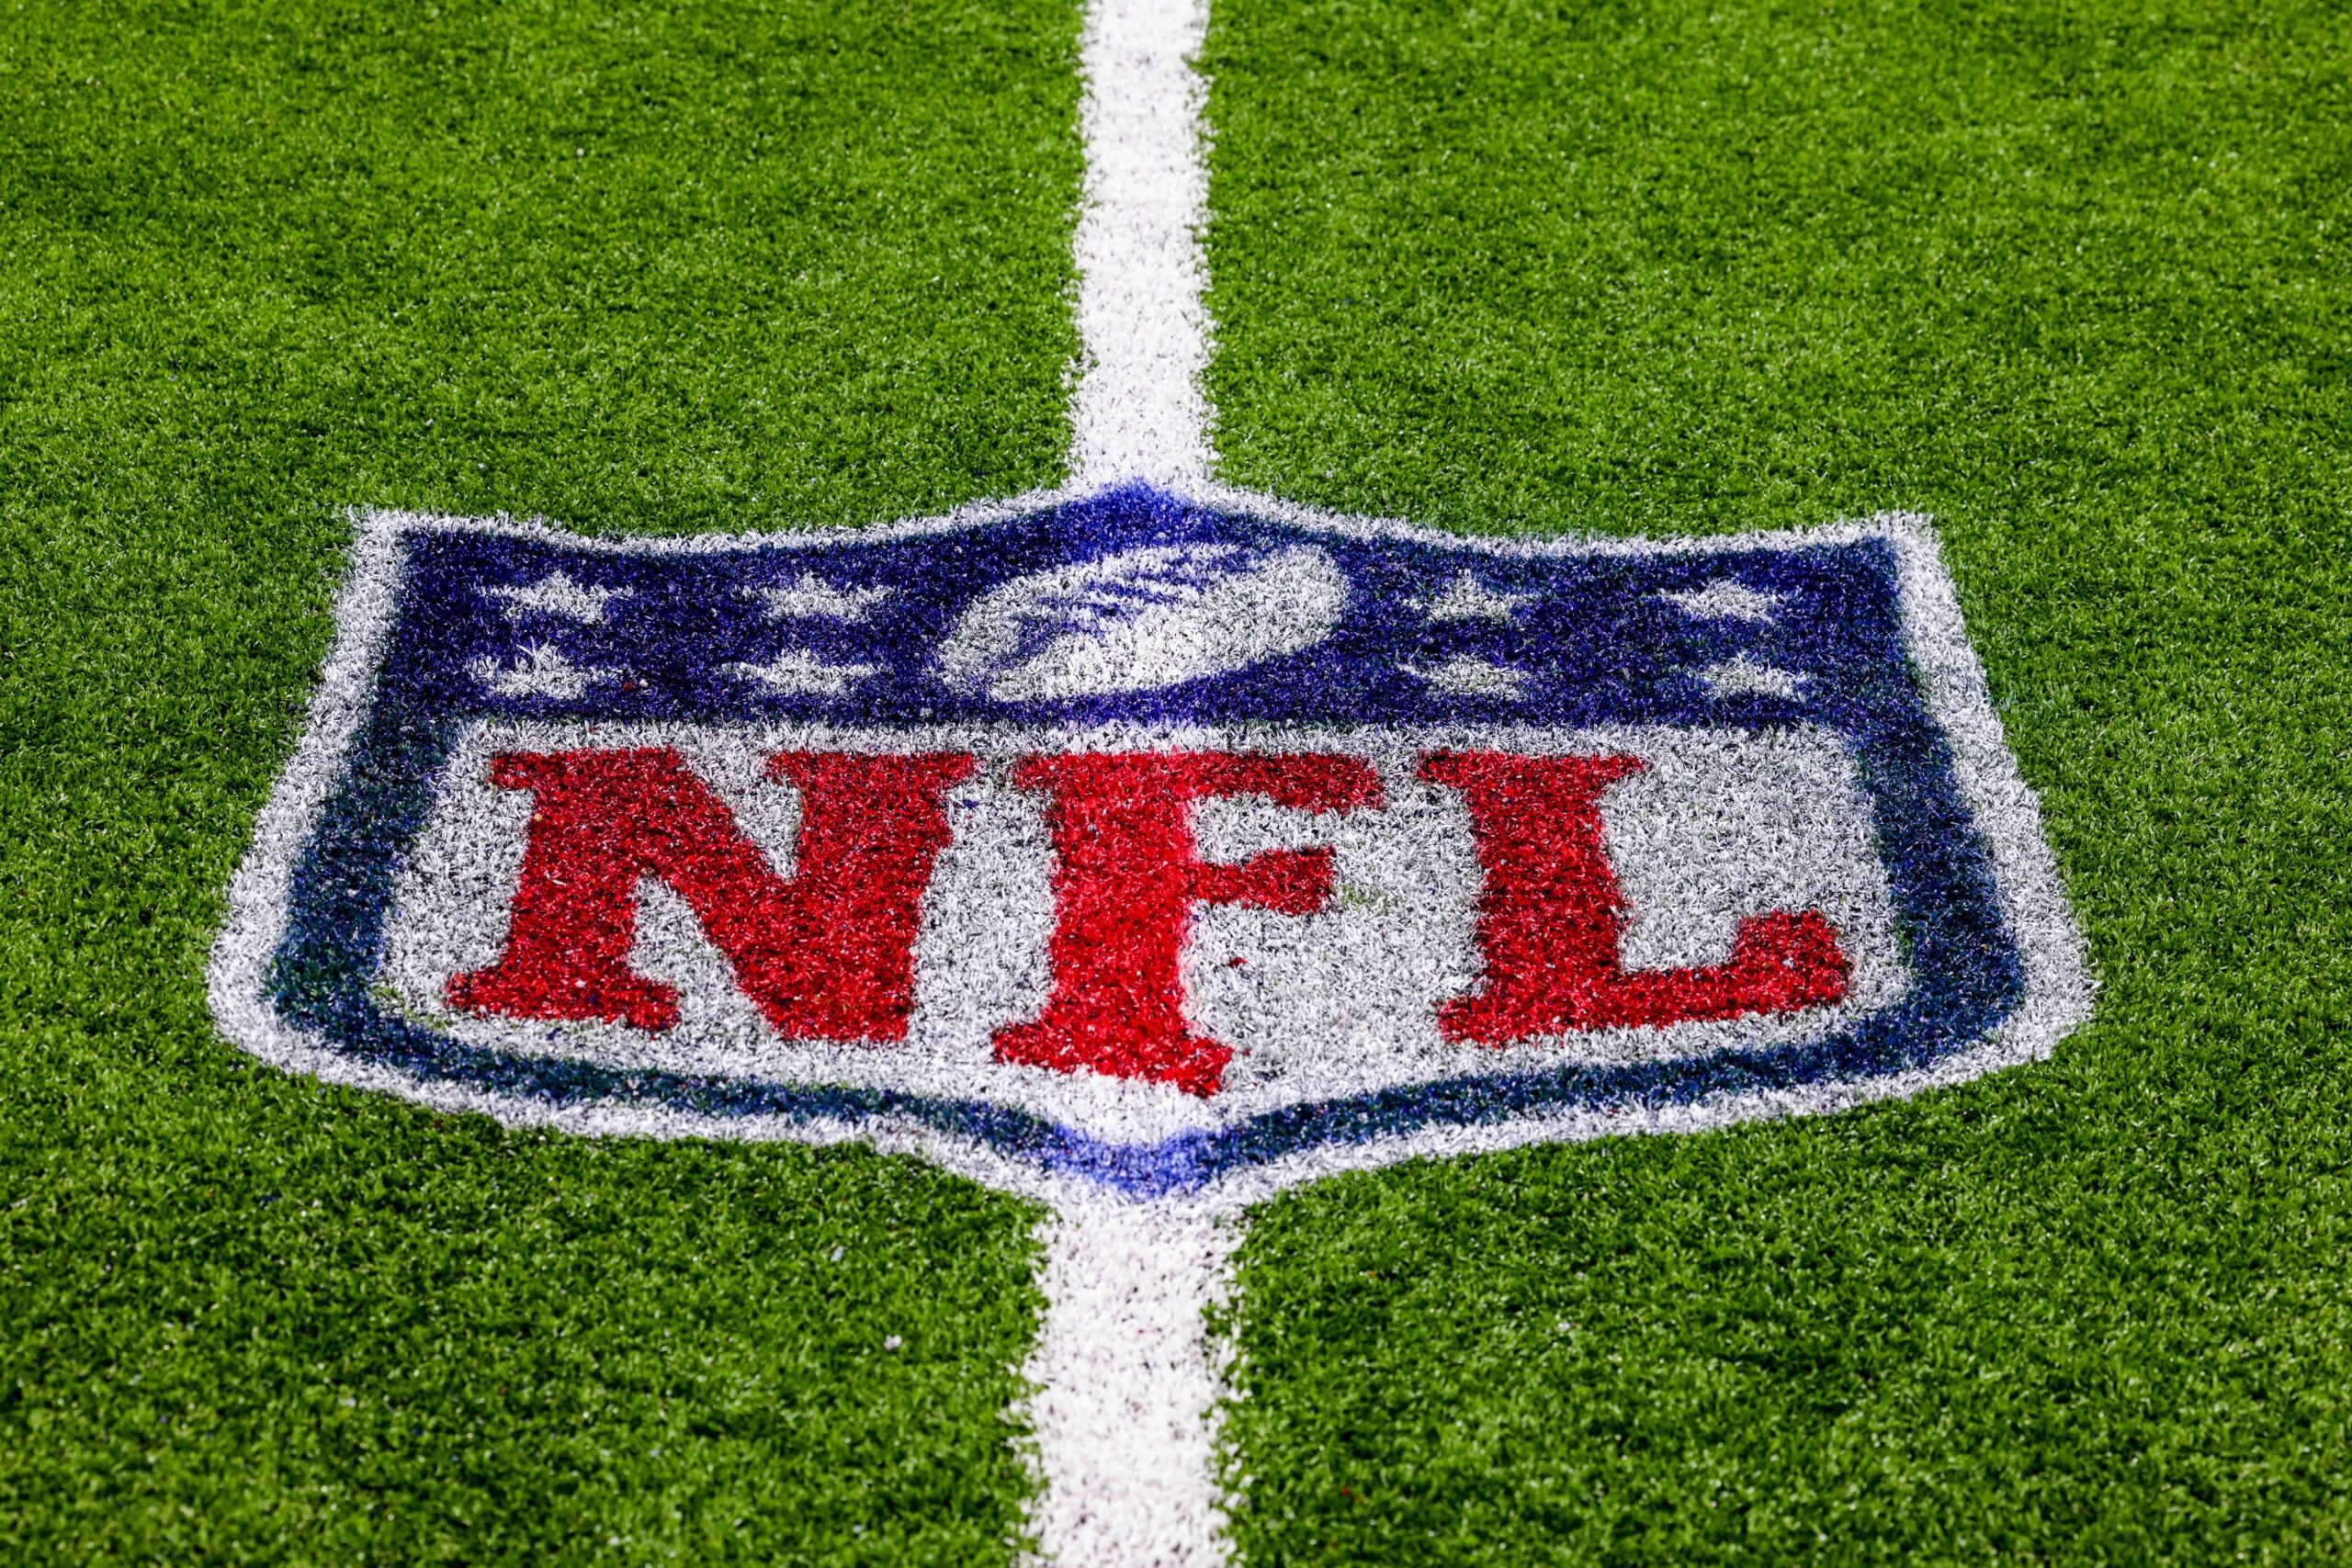 2023 NFL Preseason Schedule: Dates, Start Times, Live Streams, TV